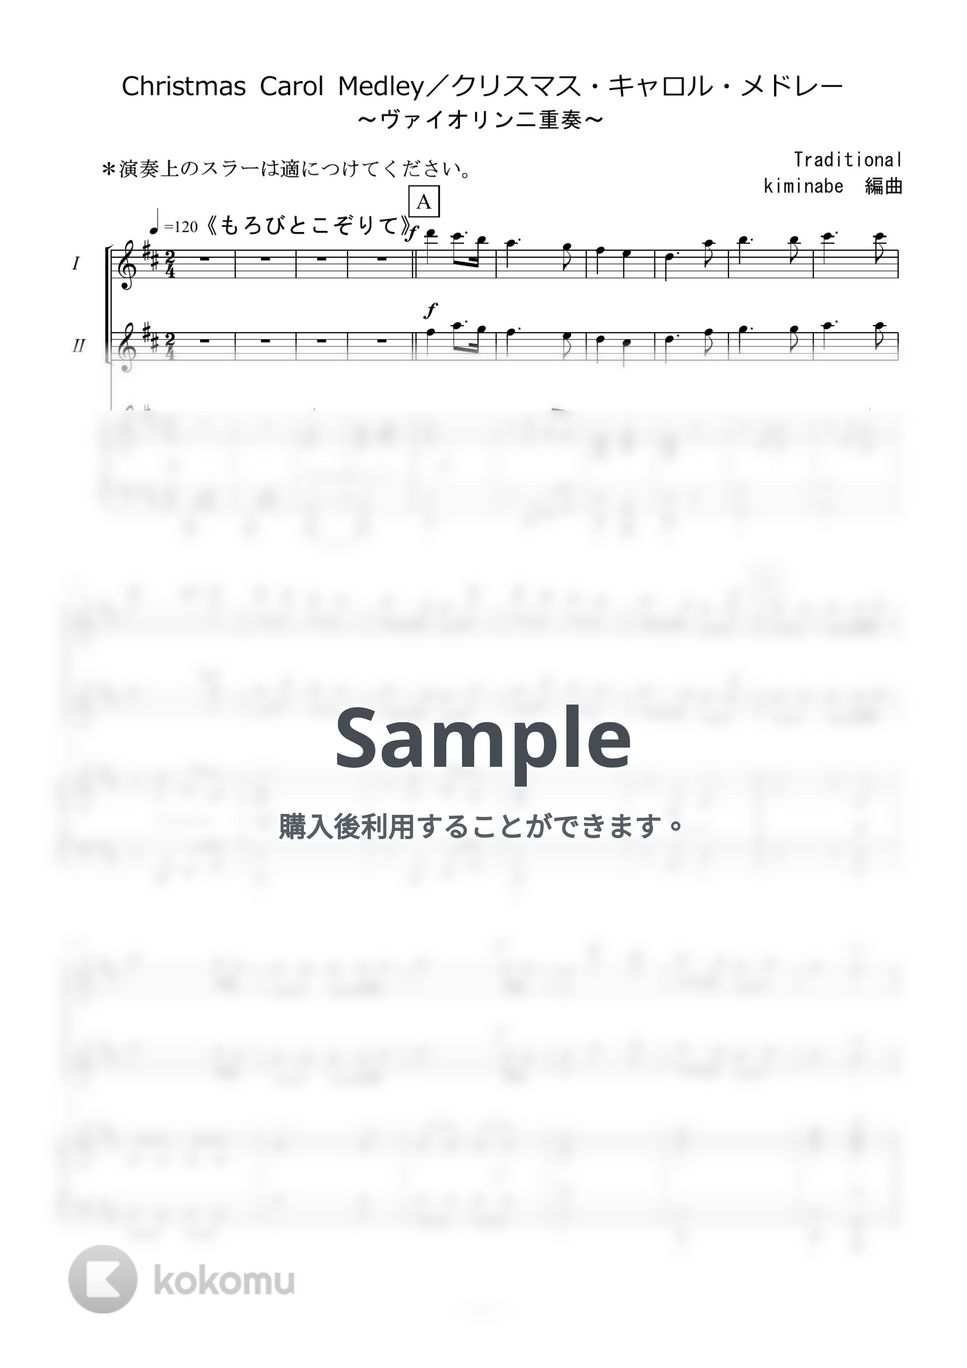 Christmas Carol Medley／クリスマス・キャロル・メドレー (ヴァイオリン二重奏) by kiminabe